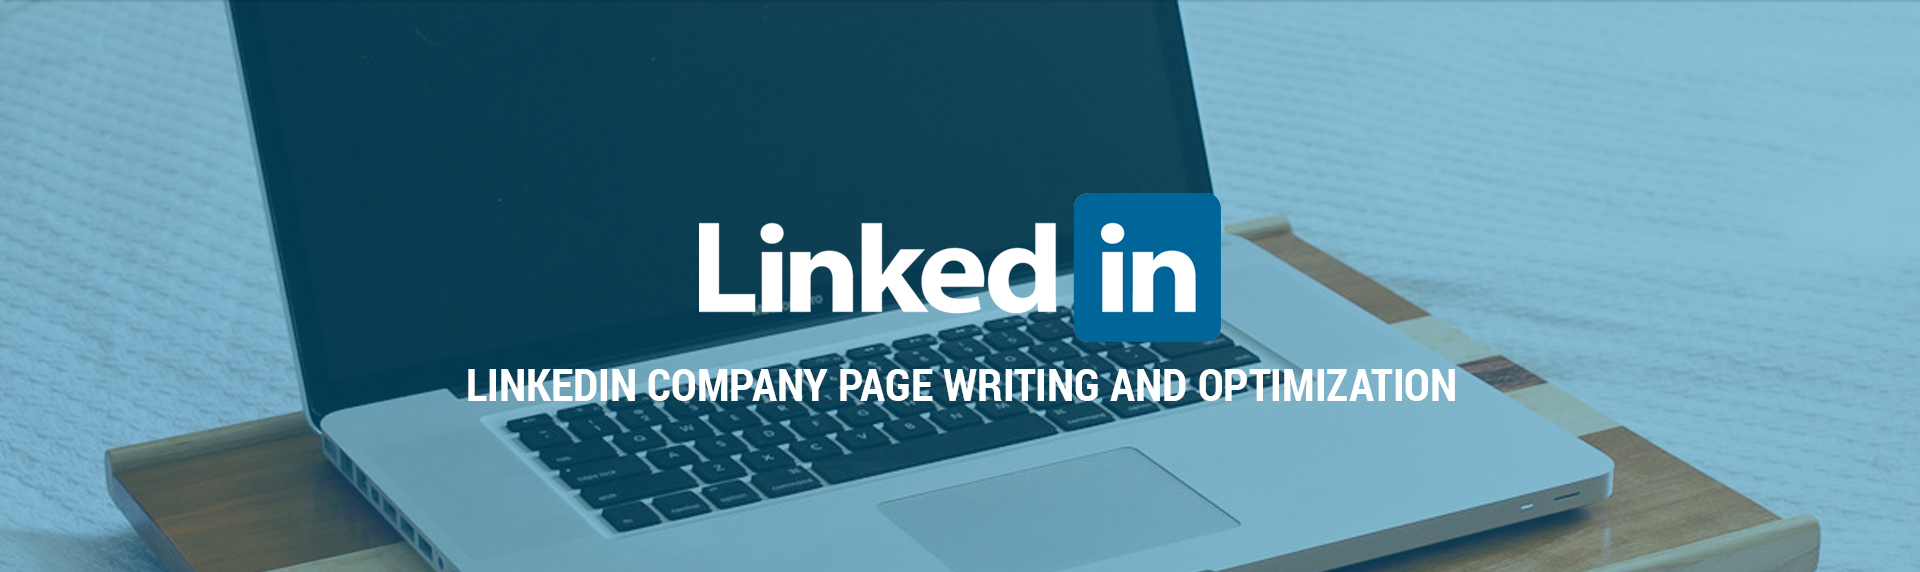 LinkedIn company page writing and optimization